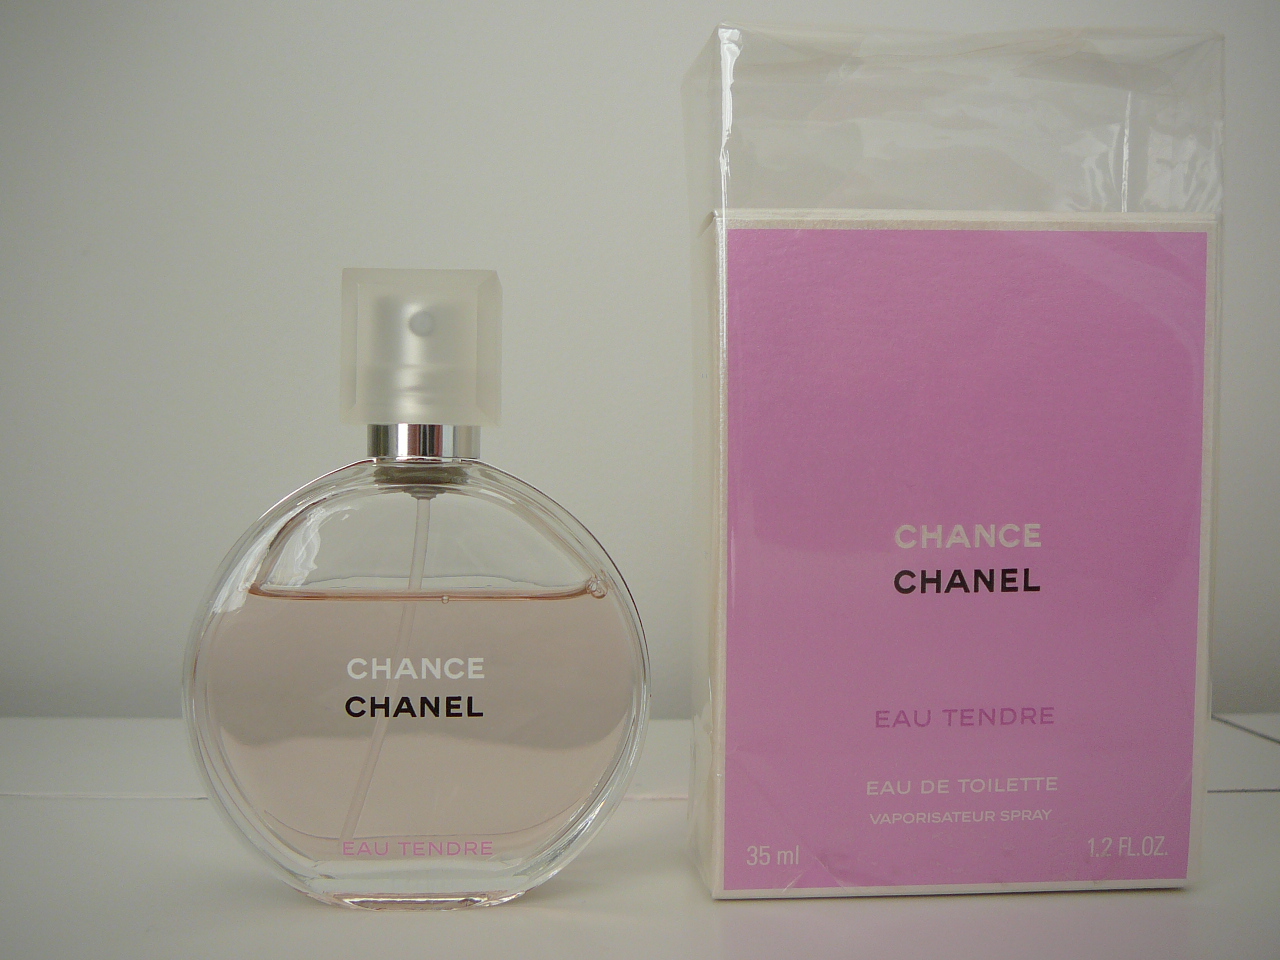 Шанель розовые цена. Chanel chance 30 ml 50 100. Парфюм женский Шанель шанс розовый. Chanel chance розовый. Шанель шанс розовый 50 мл.